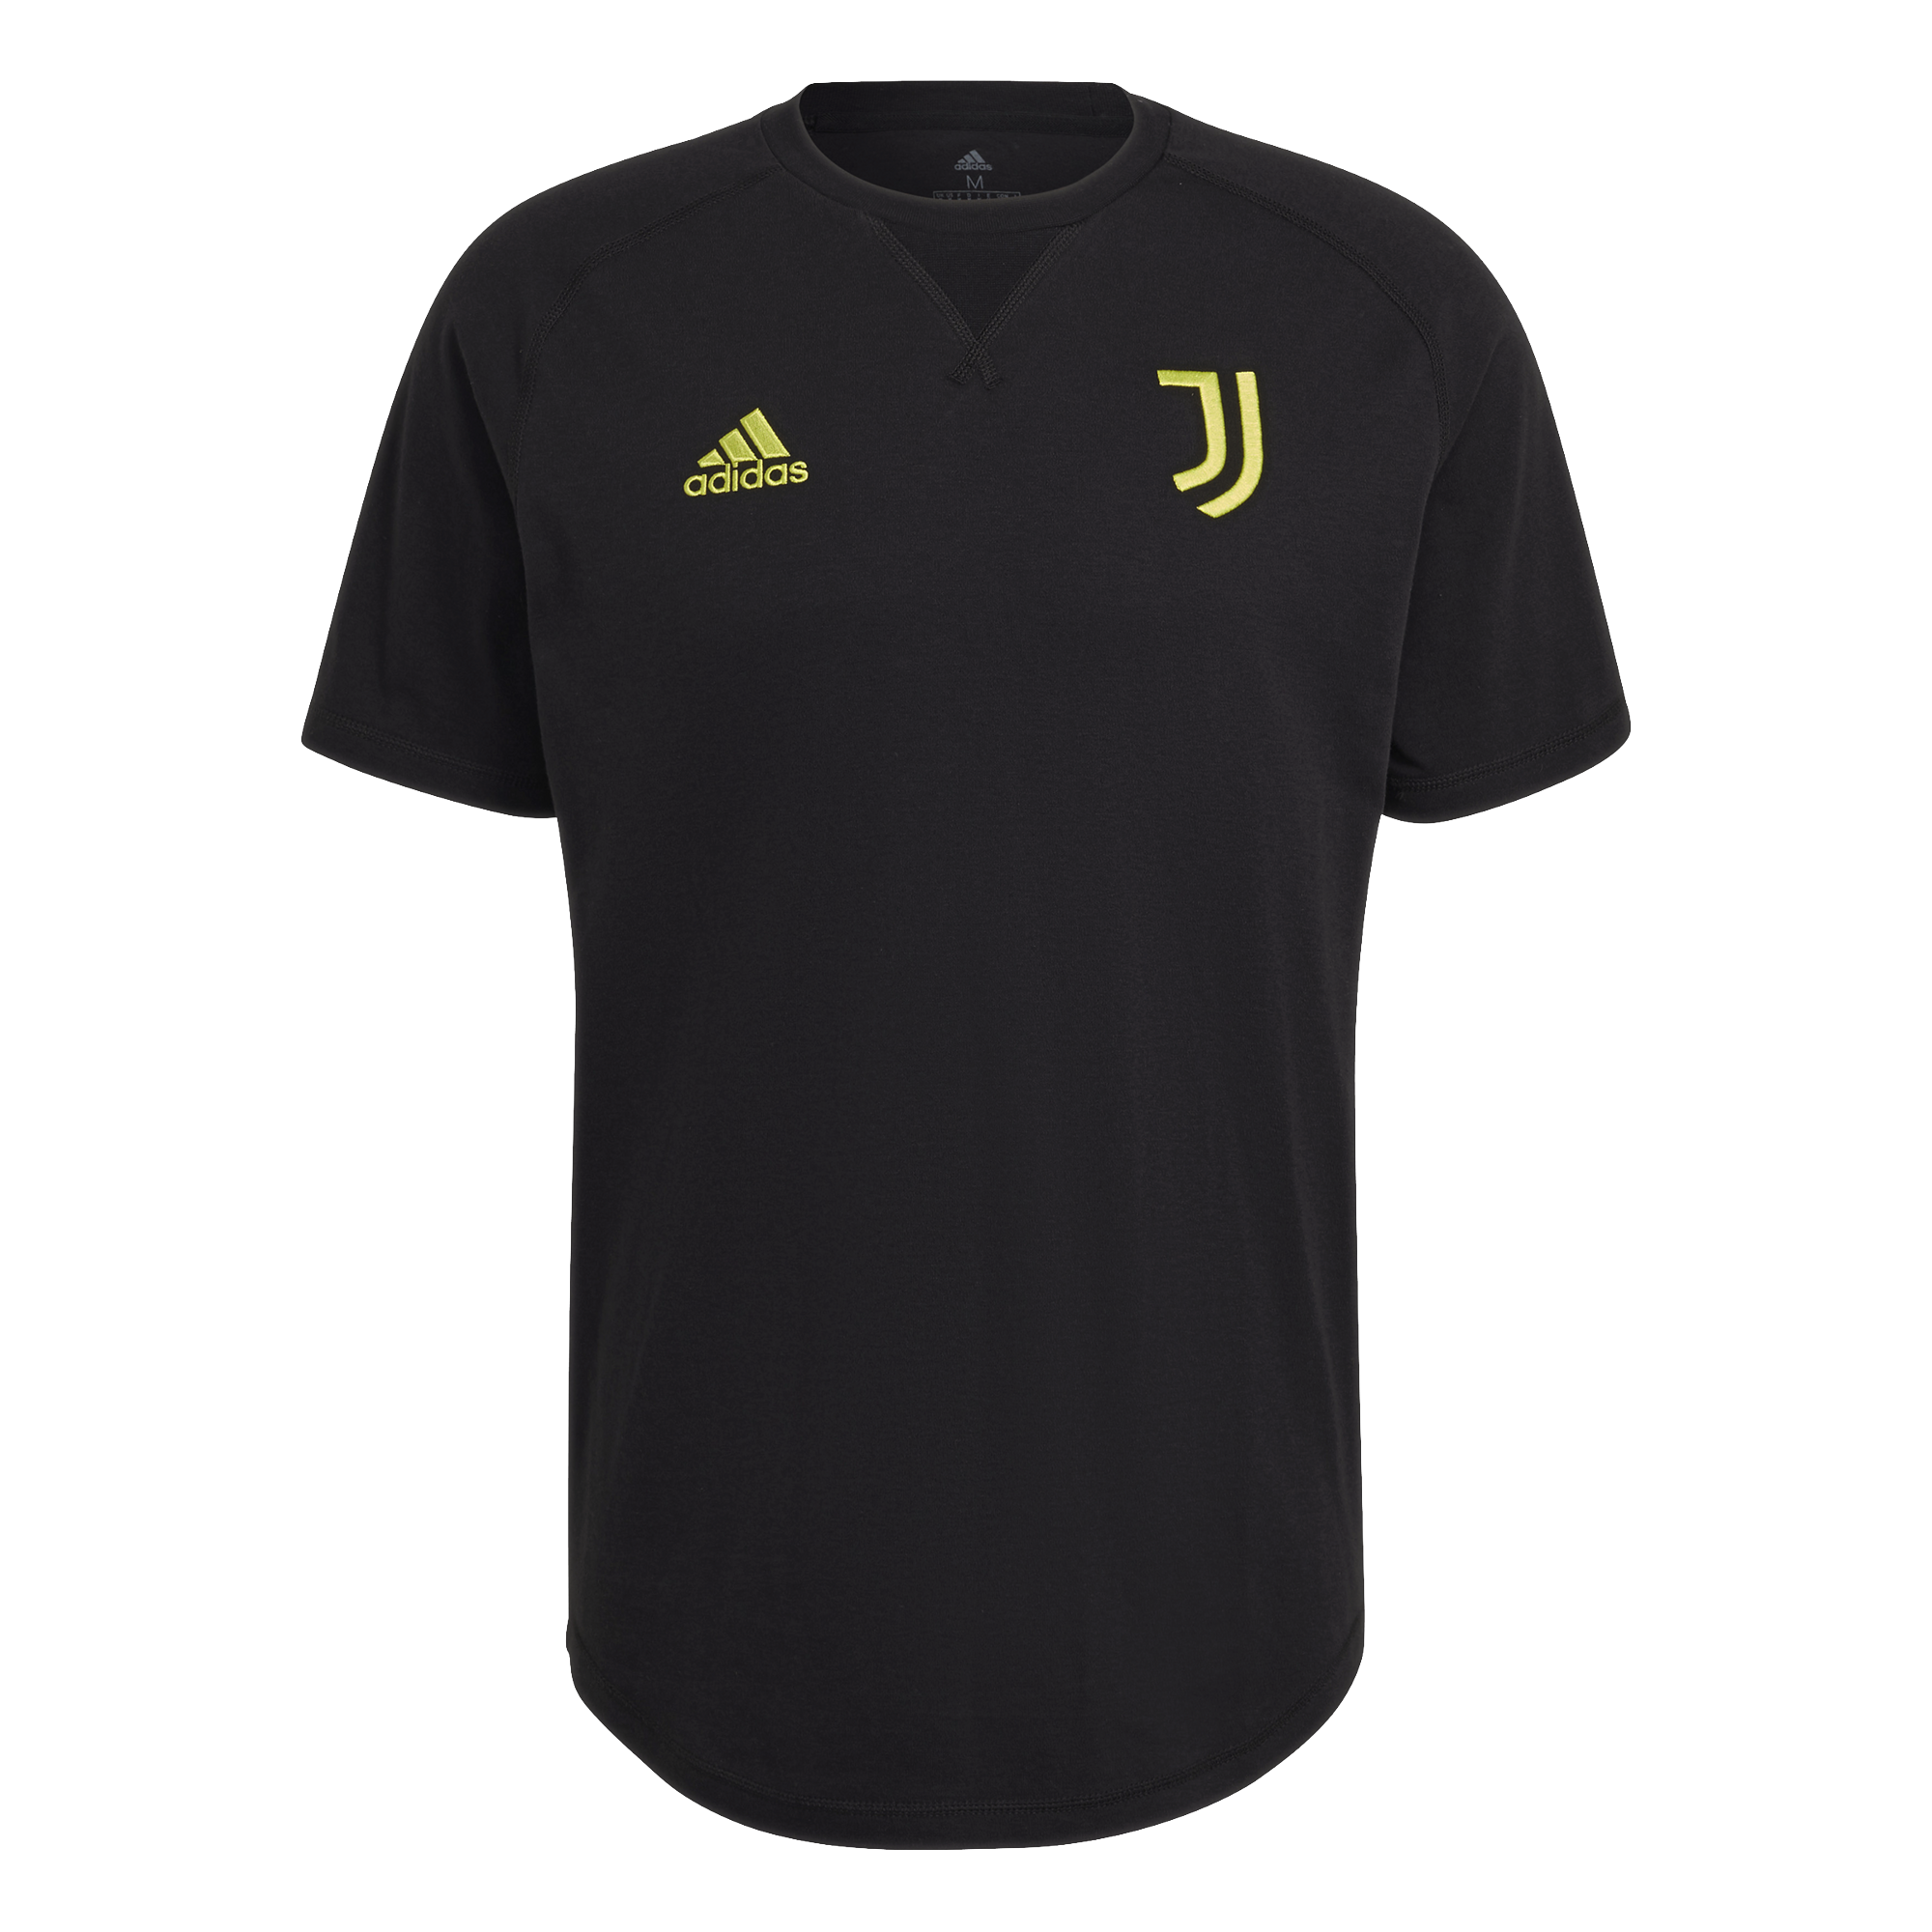 Adidas Juventus FC Travel černá/žlutá UK S Pánské